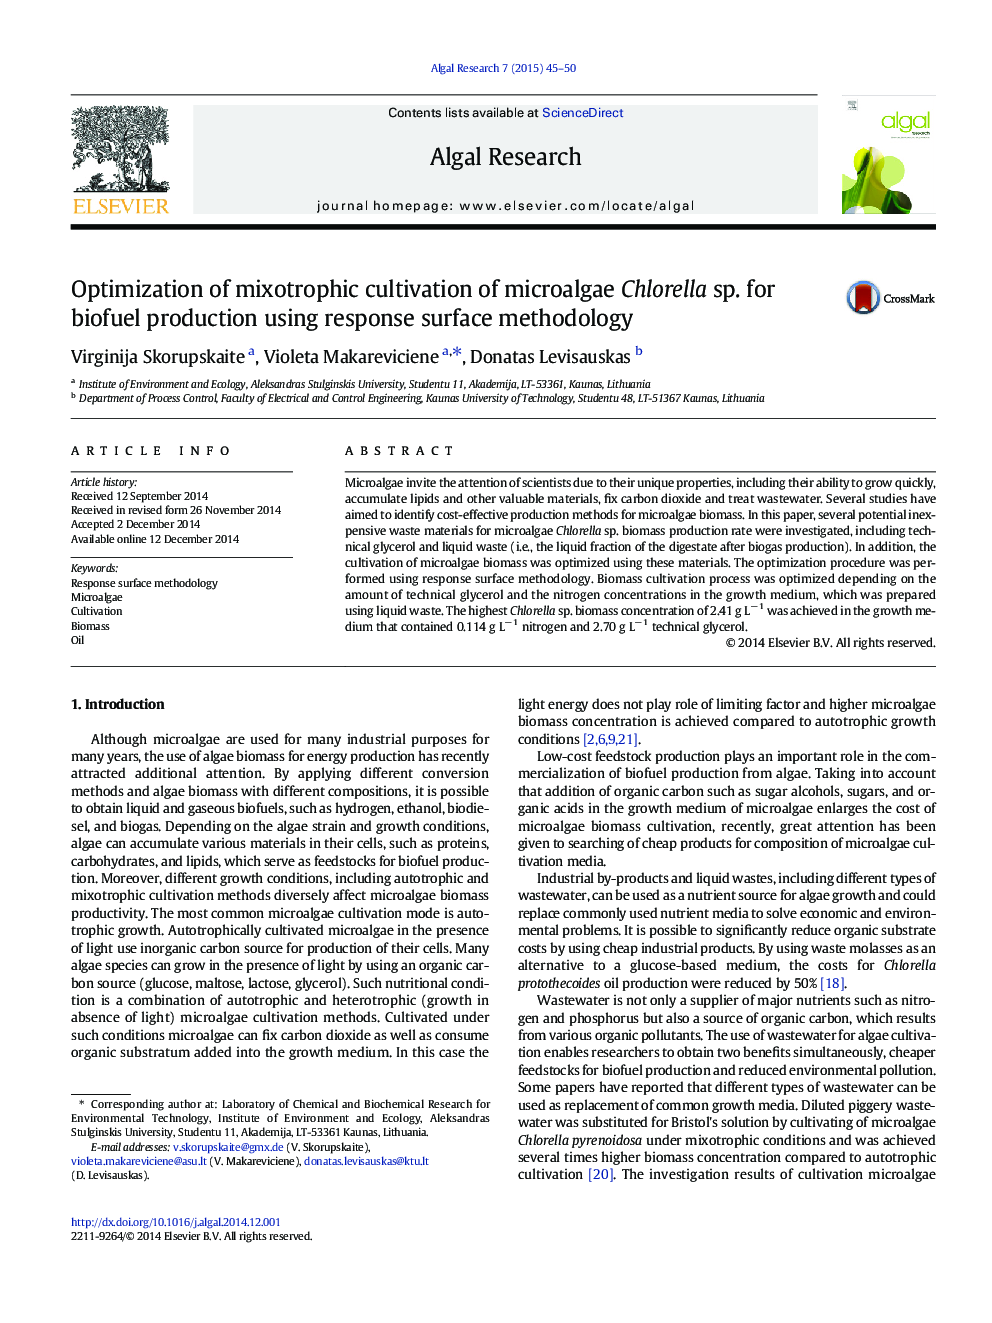 Optimization of mixotrophic cultivation of microalgae Chlorella sp. for biofuel production using response surface methodology